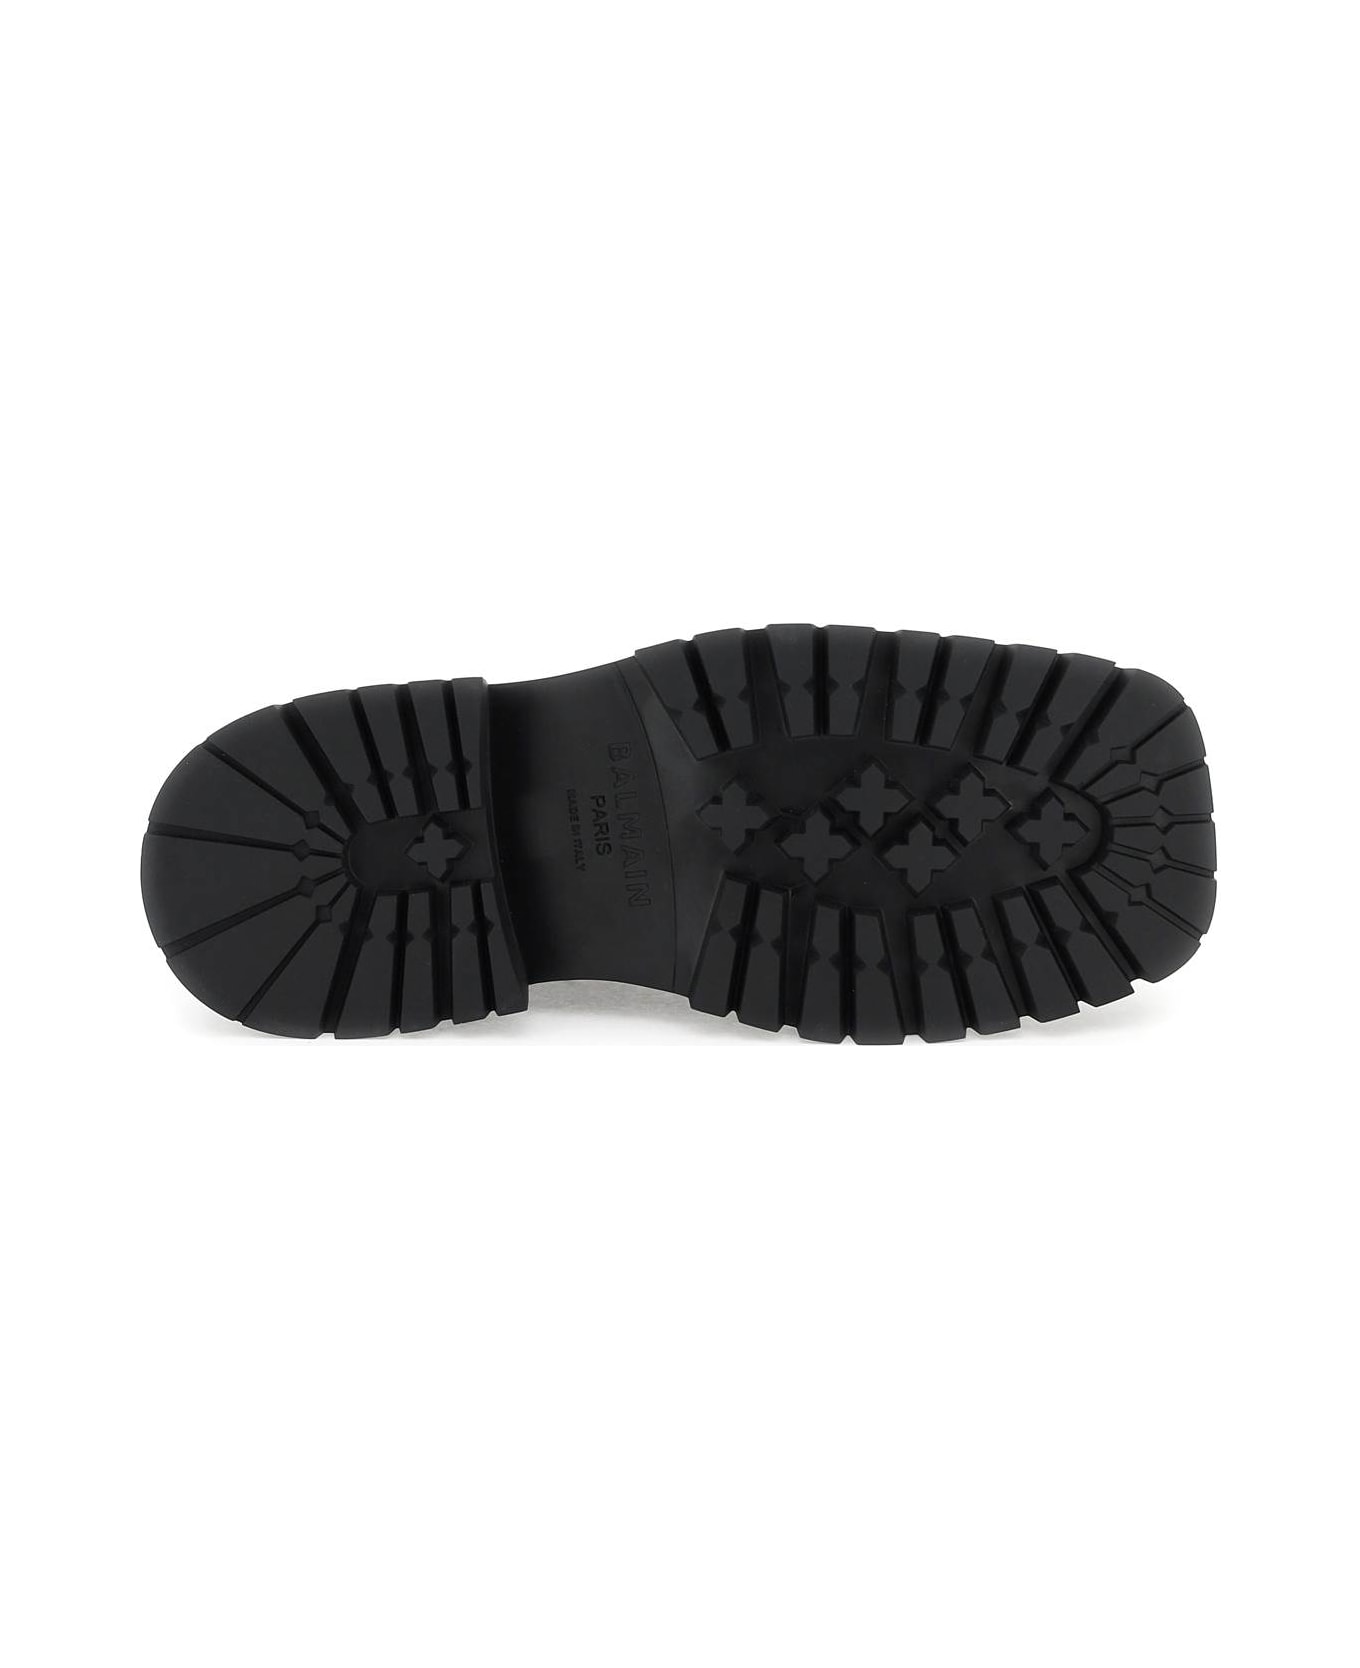 Balmain Leather Ranger Boots With Maxi Buttons - NOIR (Black)